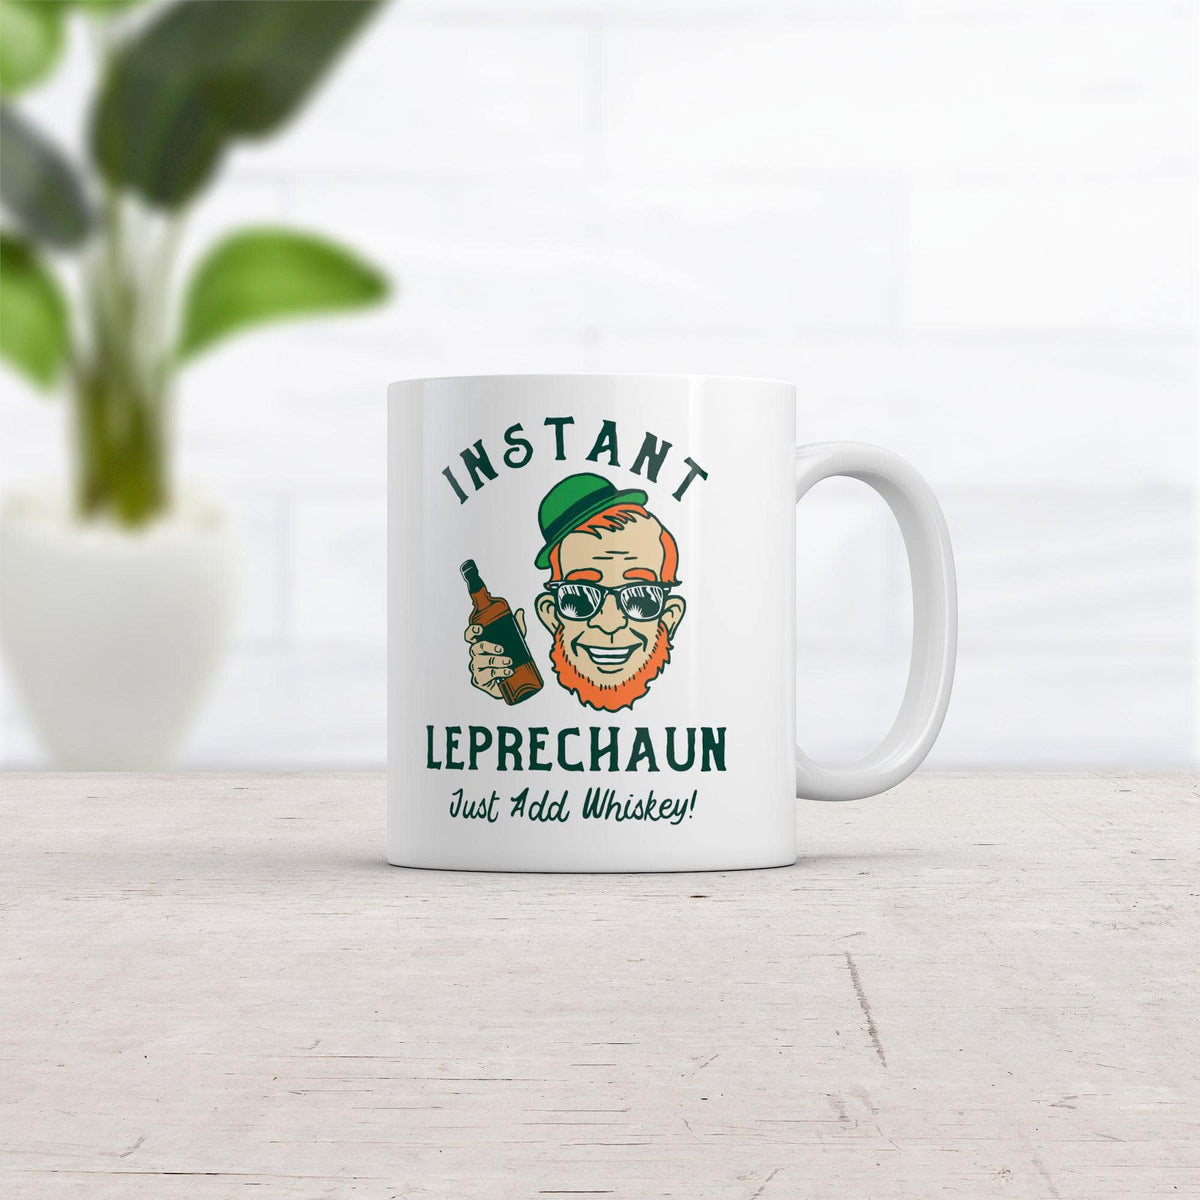 Instant Leprechaun Mug  -  Crazy Dog T-Shirts